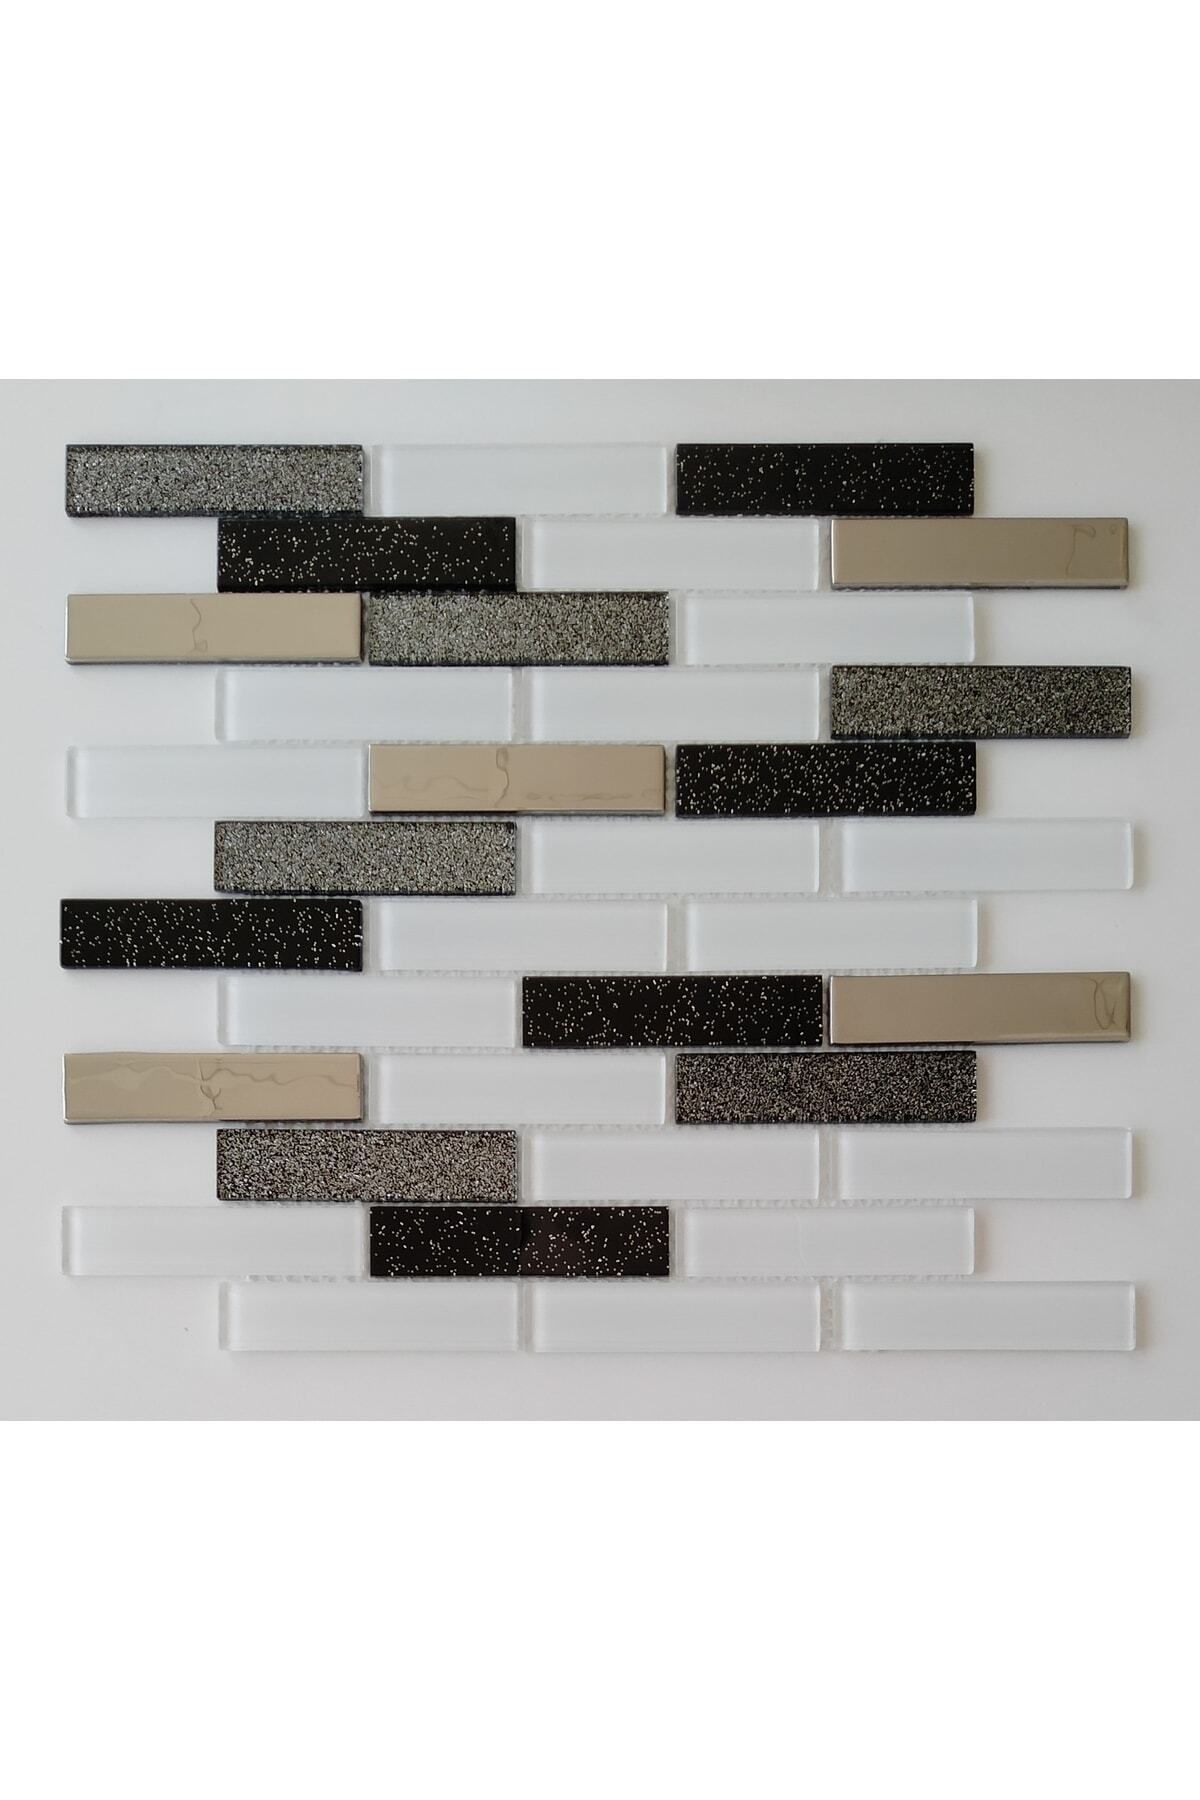 MozaiKristaL Mutfak Tezgah Arası 23x98x4mm Beyaz, Simli Siyah, Krom Kristal Cam Mozaik. ( 1 Koli=1 M2 Fiyatıdır)